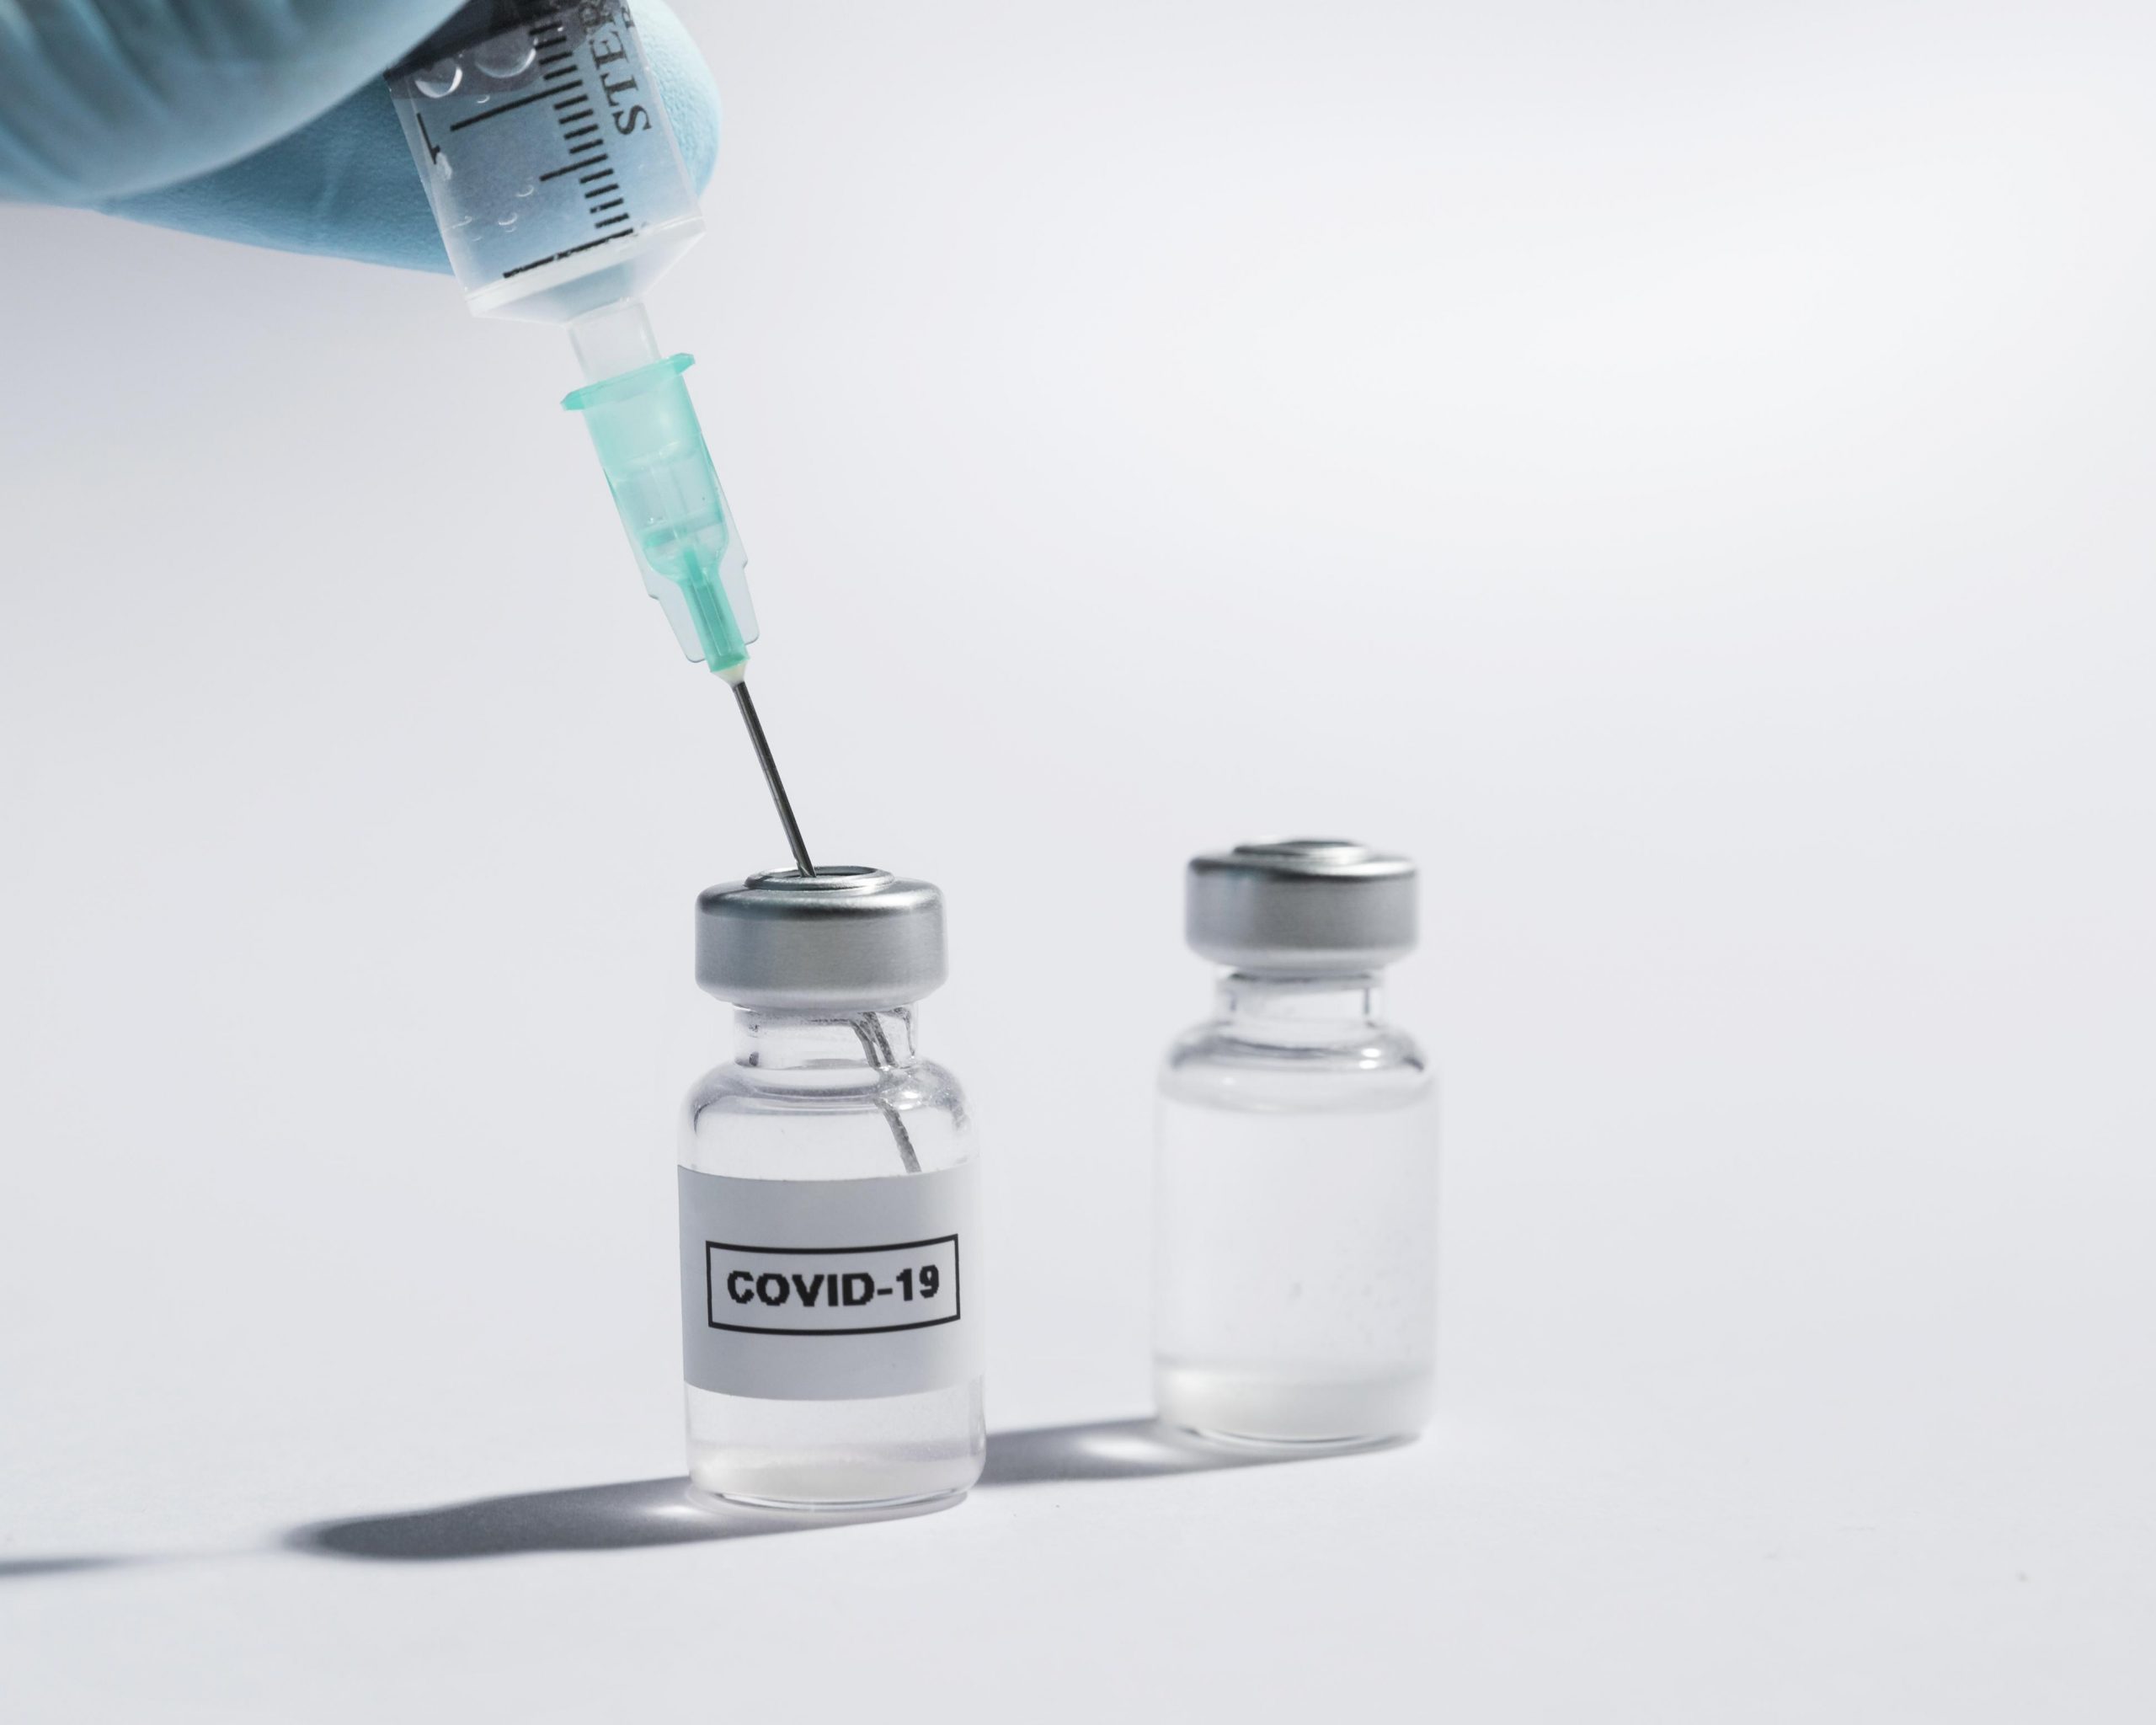 COVID-19 – Arab Saudi minat vaksin setelah terjamin keamanannya